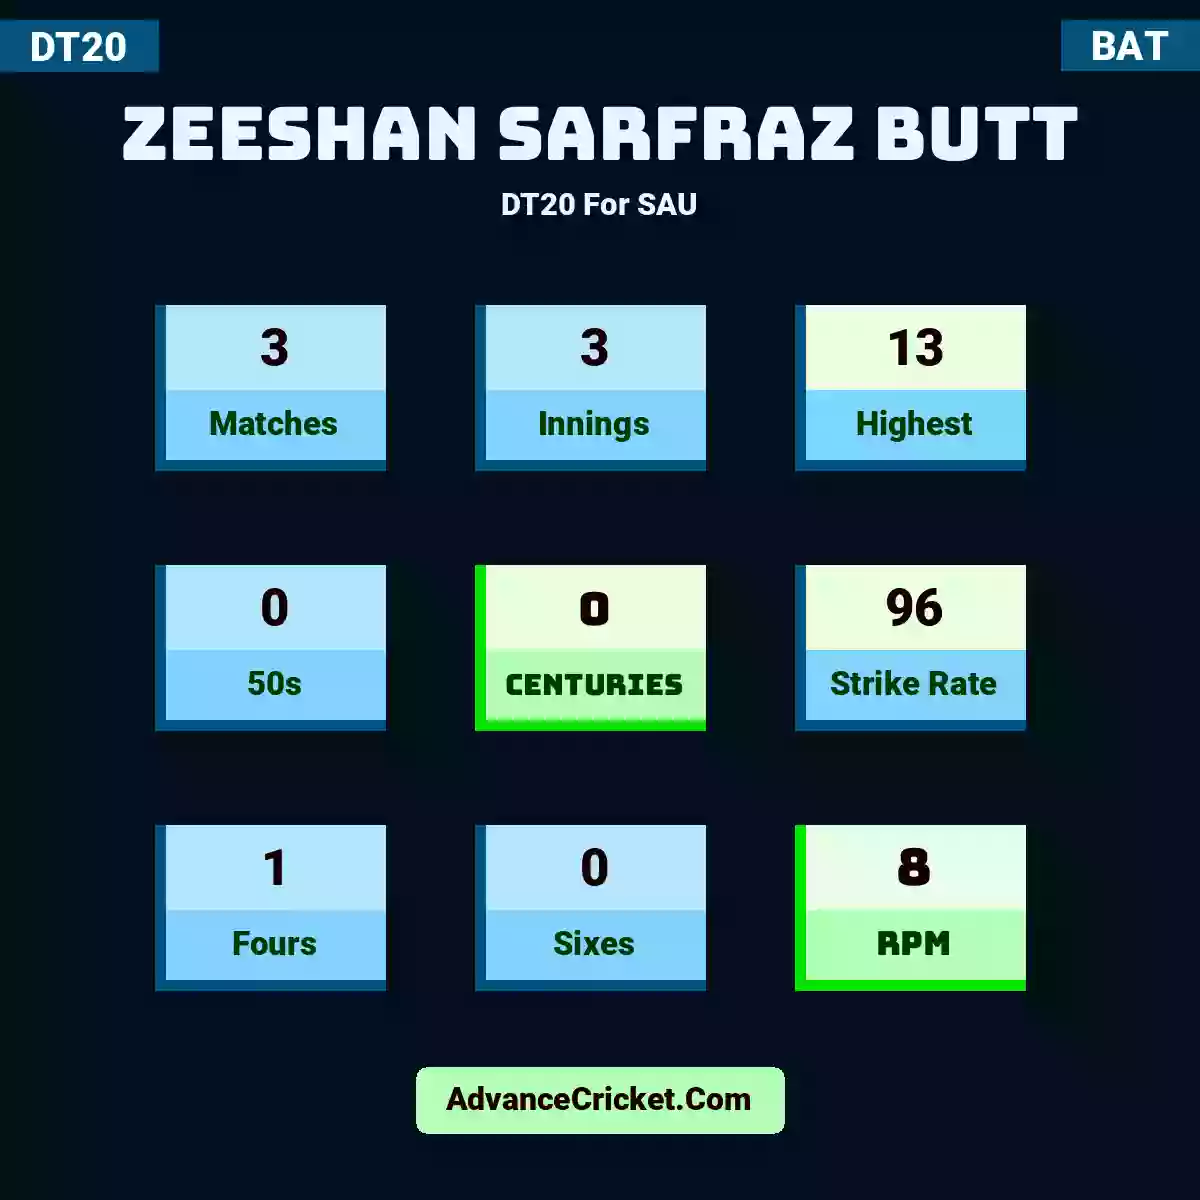 Zeeshan Sarfraz Butt DT20  For SAU, Zeeshan Sarfraz Butt played 3 matches, scored 13 runs as highest, 0 half-centuries, and 0 centuries, with a strike rate of 96. Z.Sarfraz.Butt hit 1 fours and 0 sixes, with an RPM of 8.